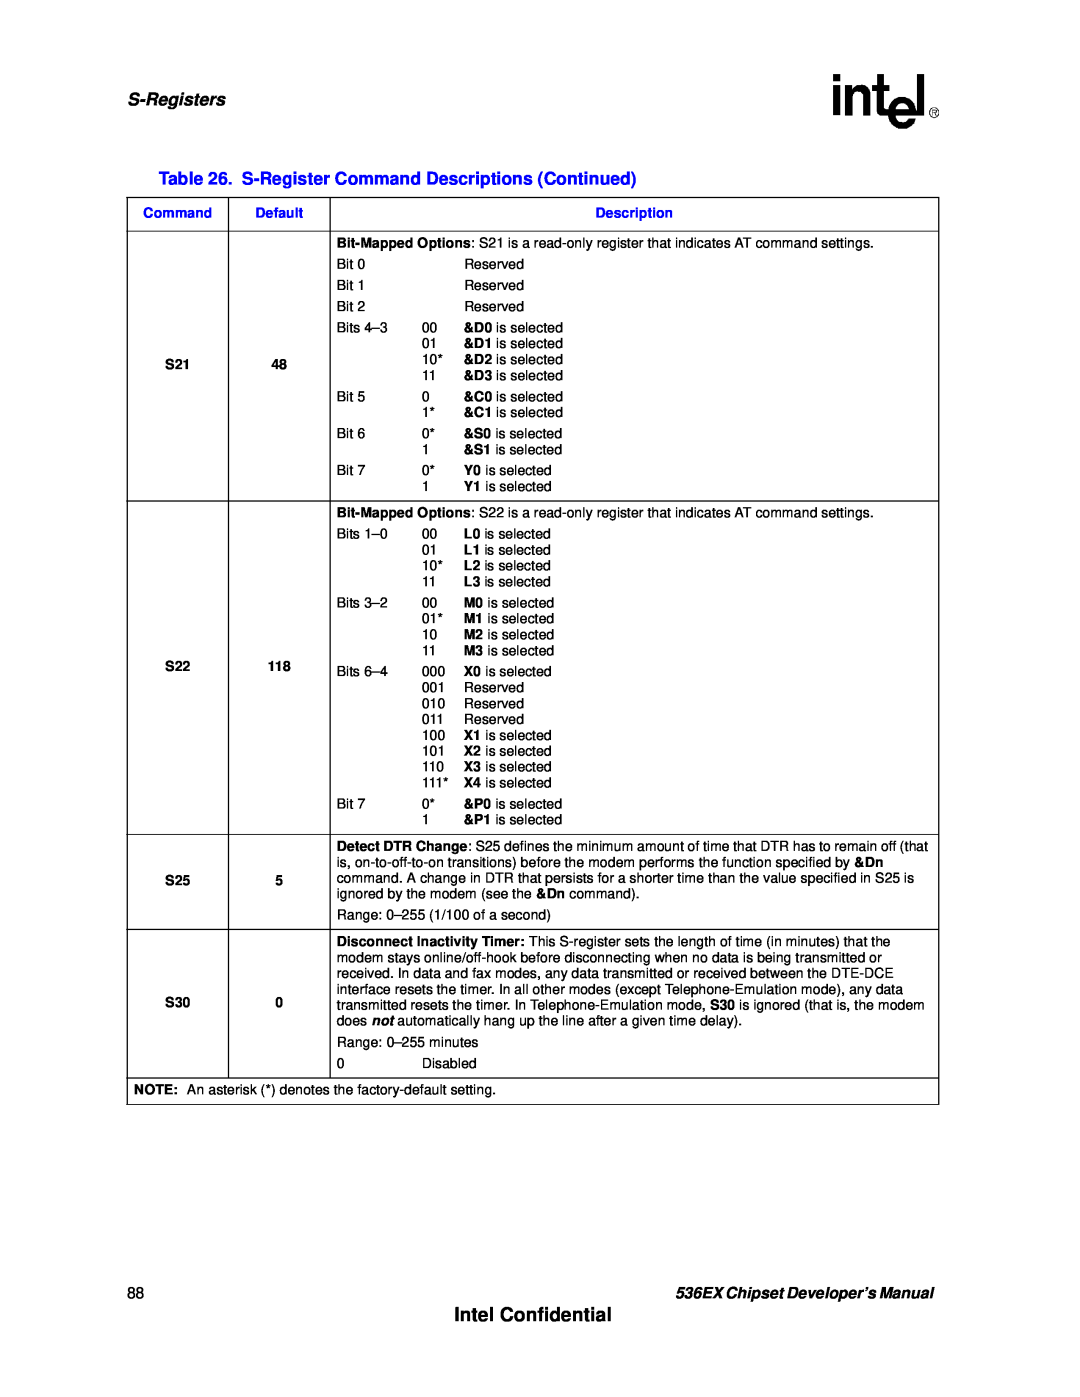 Intel manual Intel Confidential, S-Registers, 536EX Chipset Developer’s Manual 